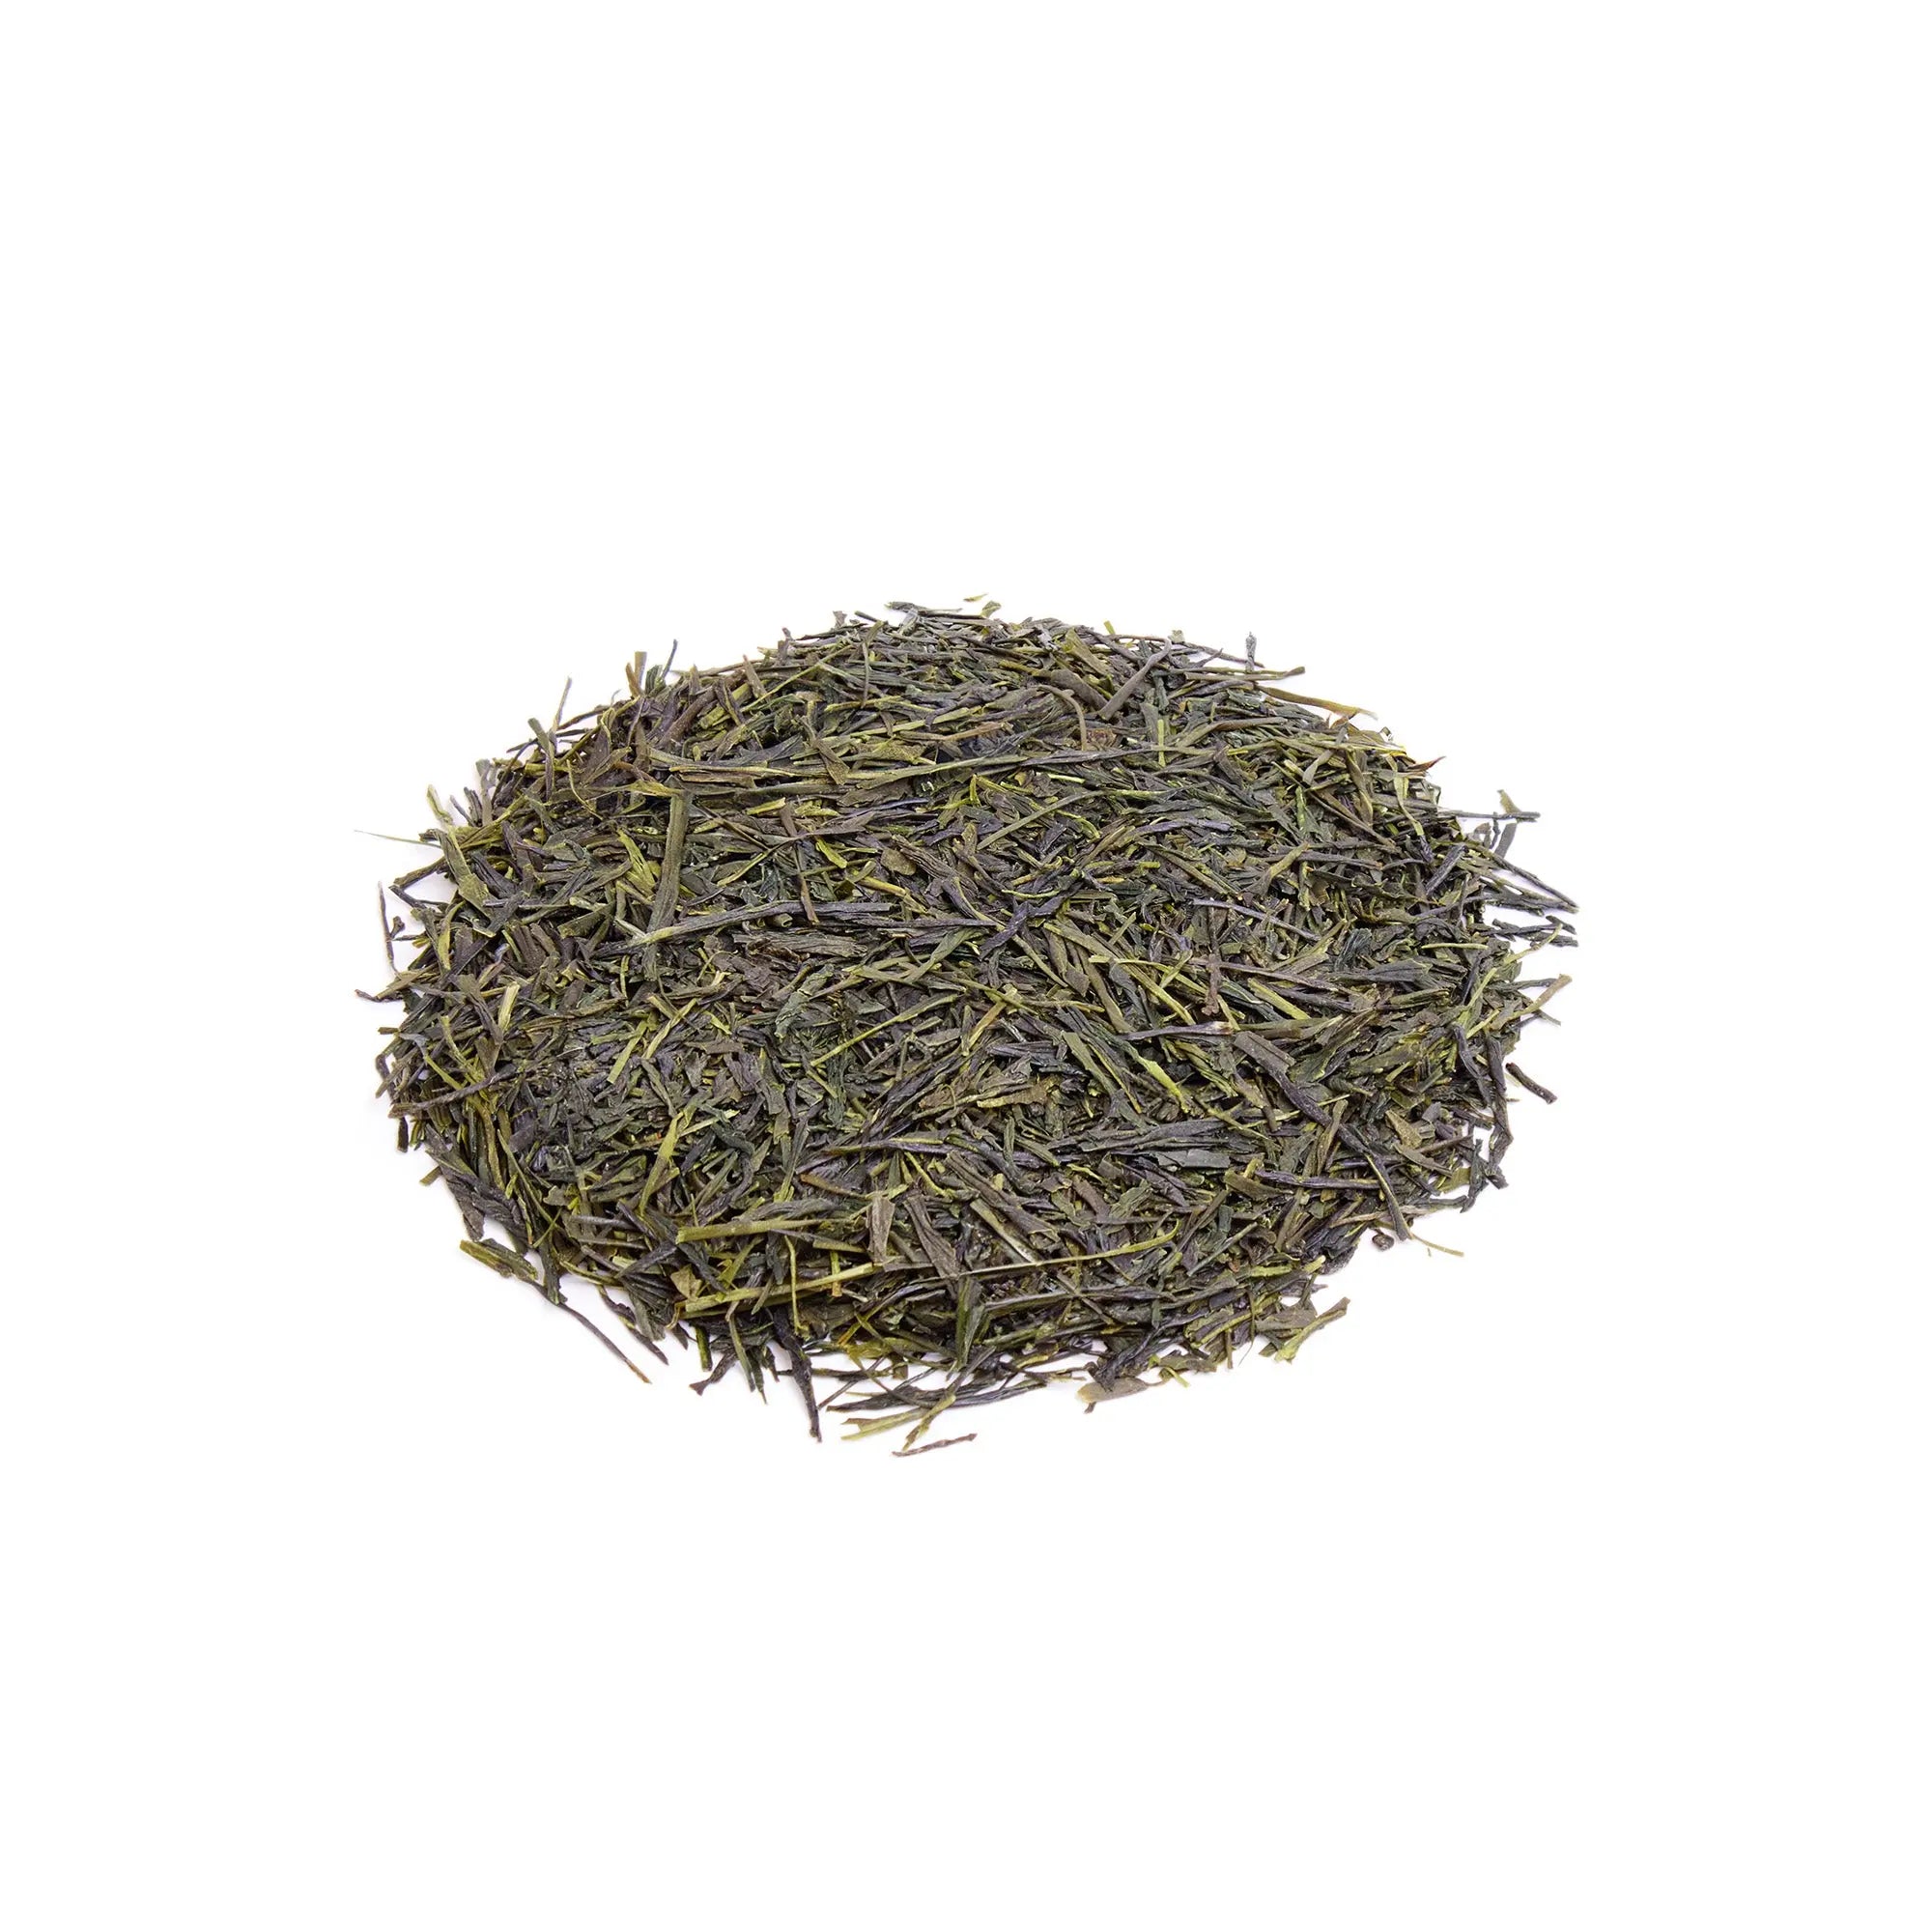 BIO - Green tea Sencha from Japan - BRU